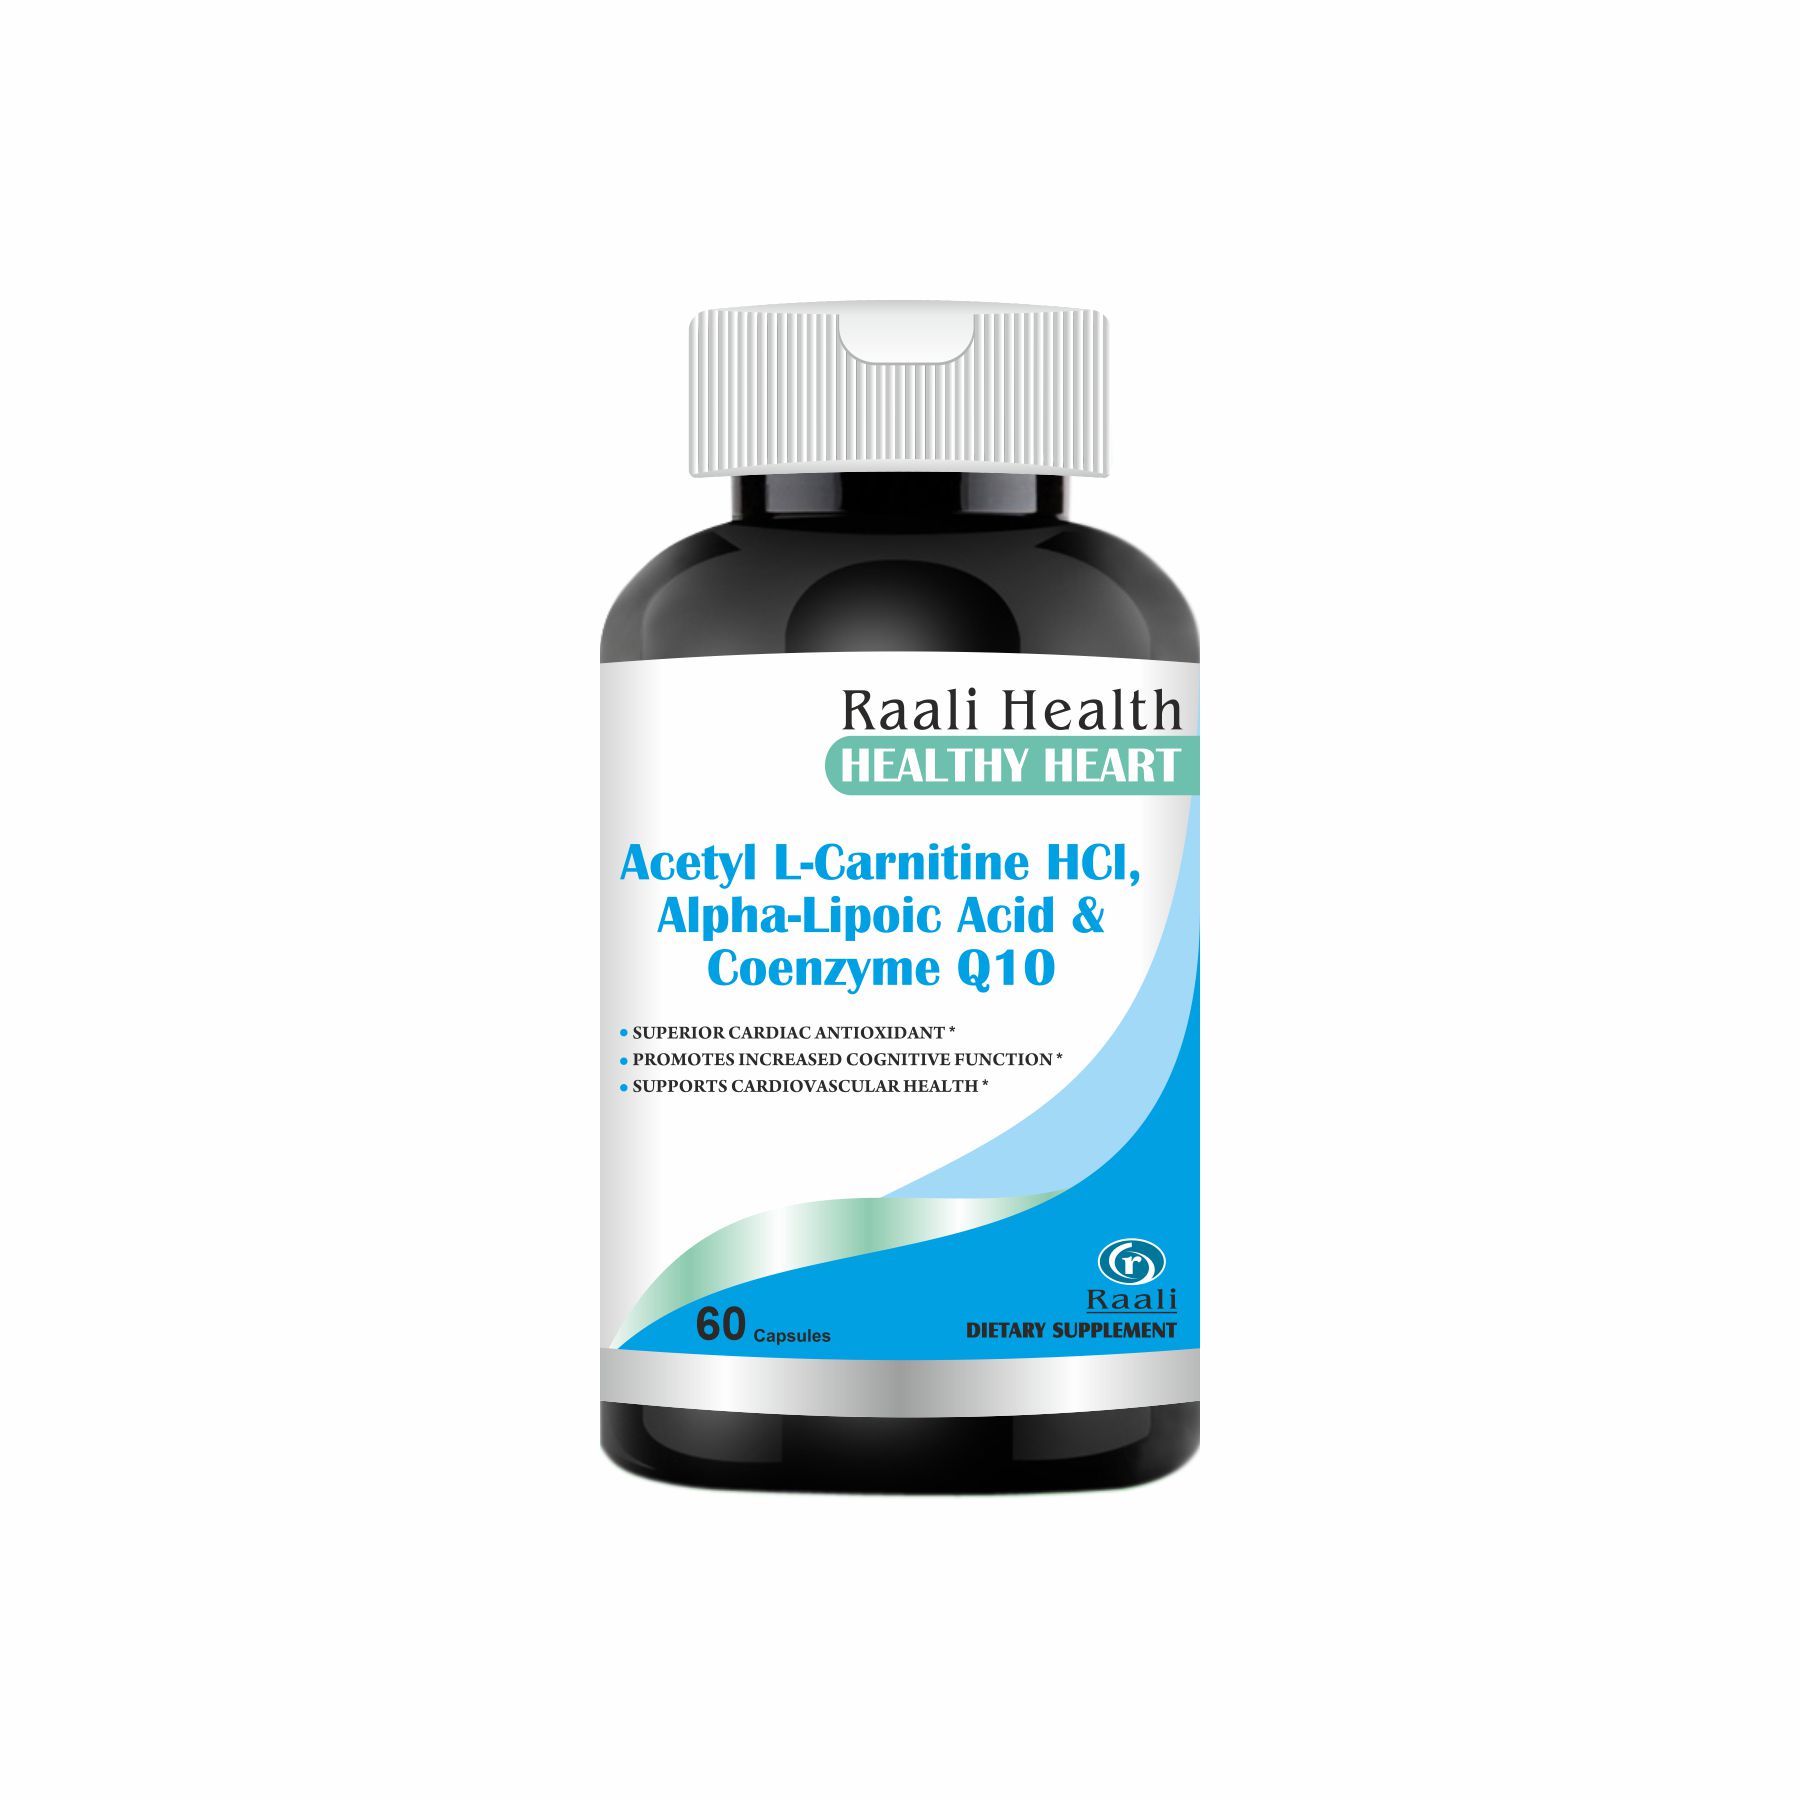 Acetyl, L-Carnitine HCL, Alpha-Lipoic Acid & Coenzyme Q10, antioxidant,support cardiovascular health, heart health